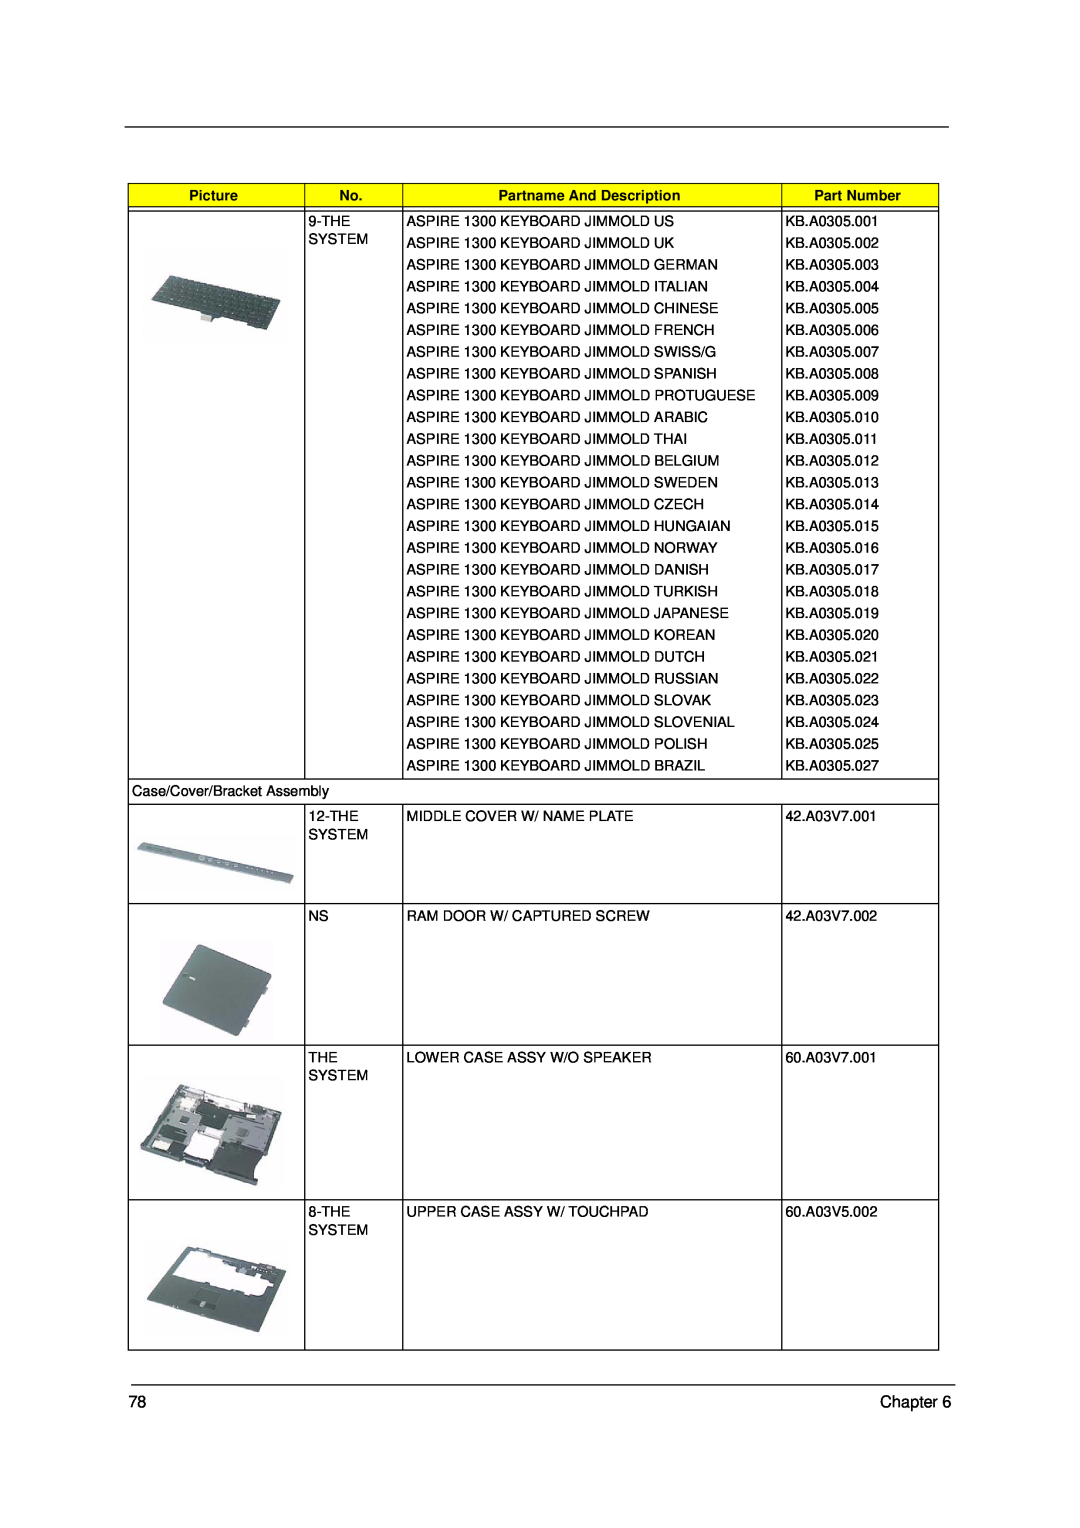 Acer 1300 Series manual Picture, Partname And Description, Part Number 